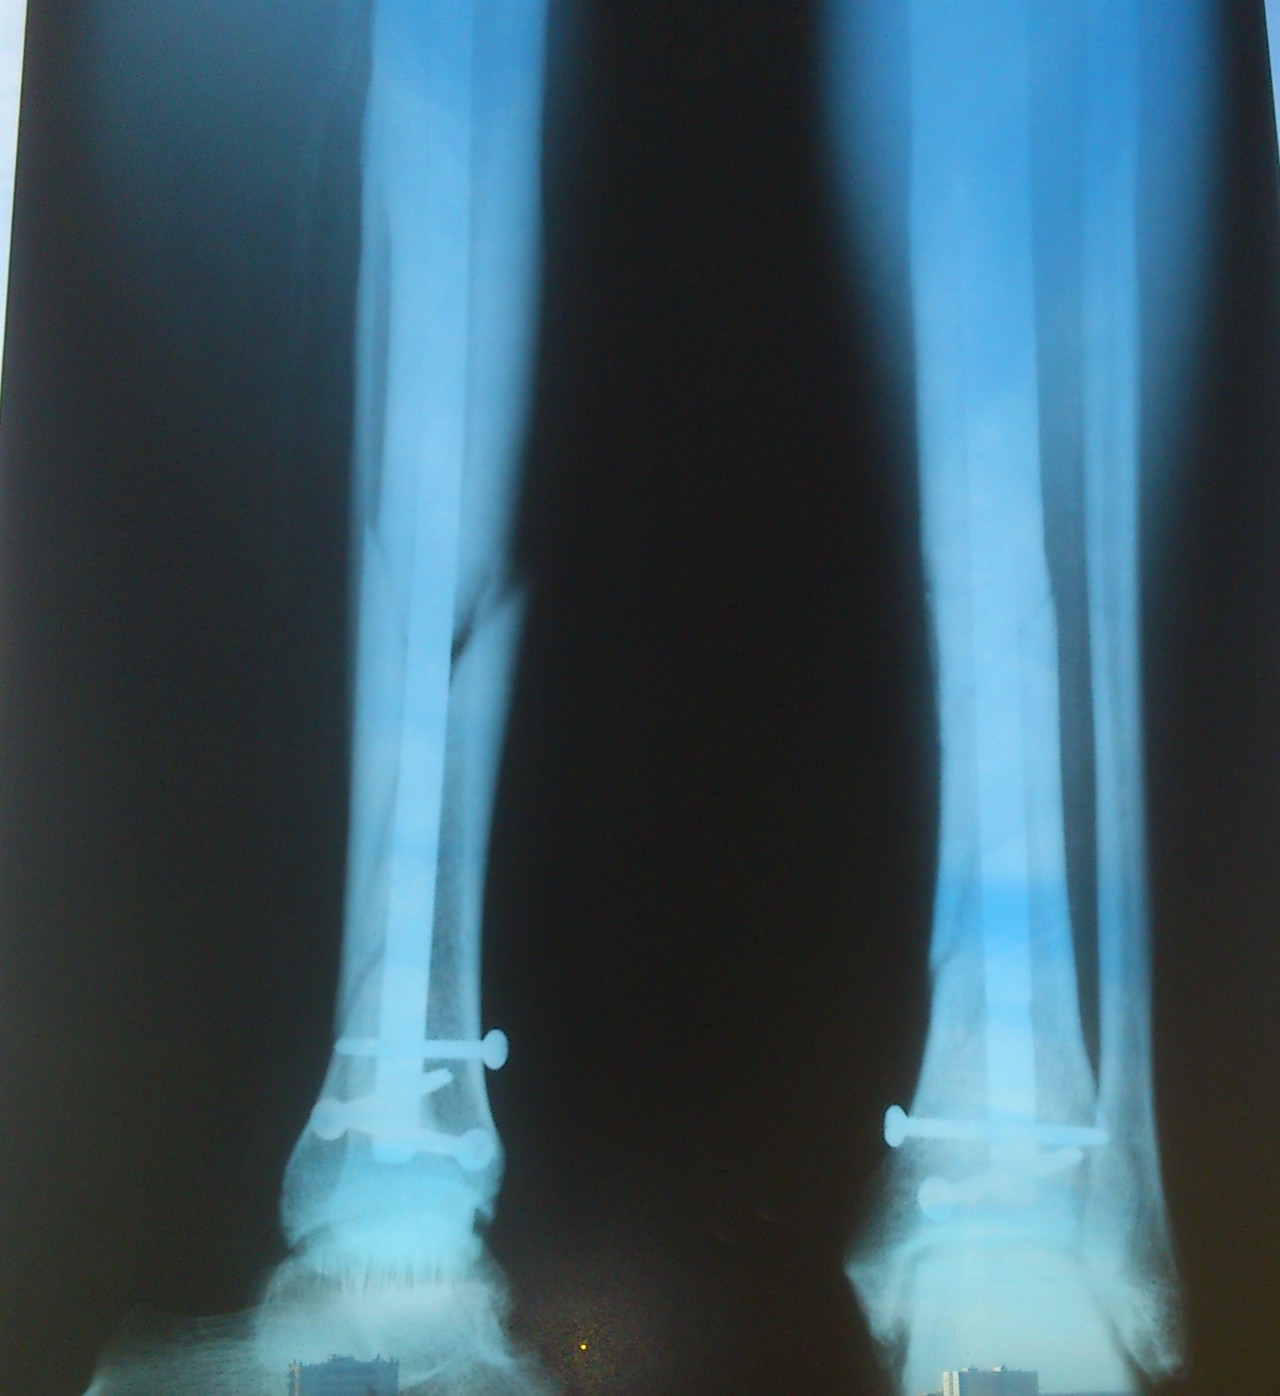 фото малоберцовой кости на ноге